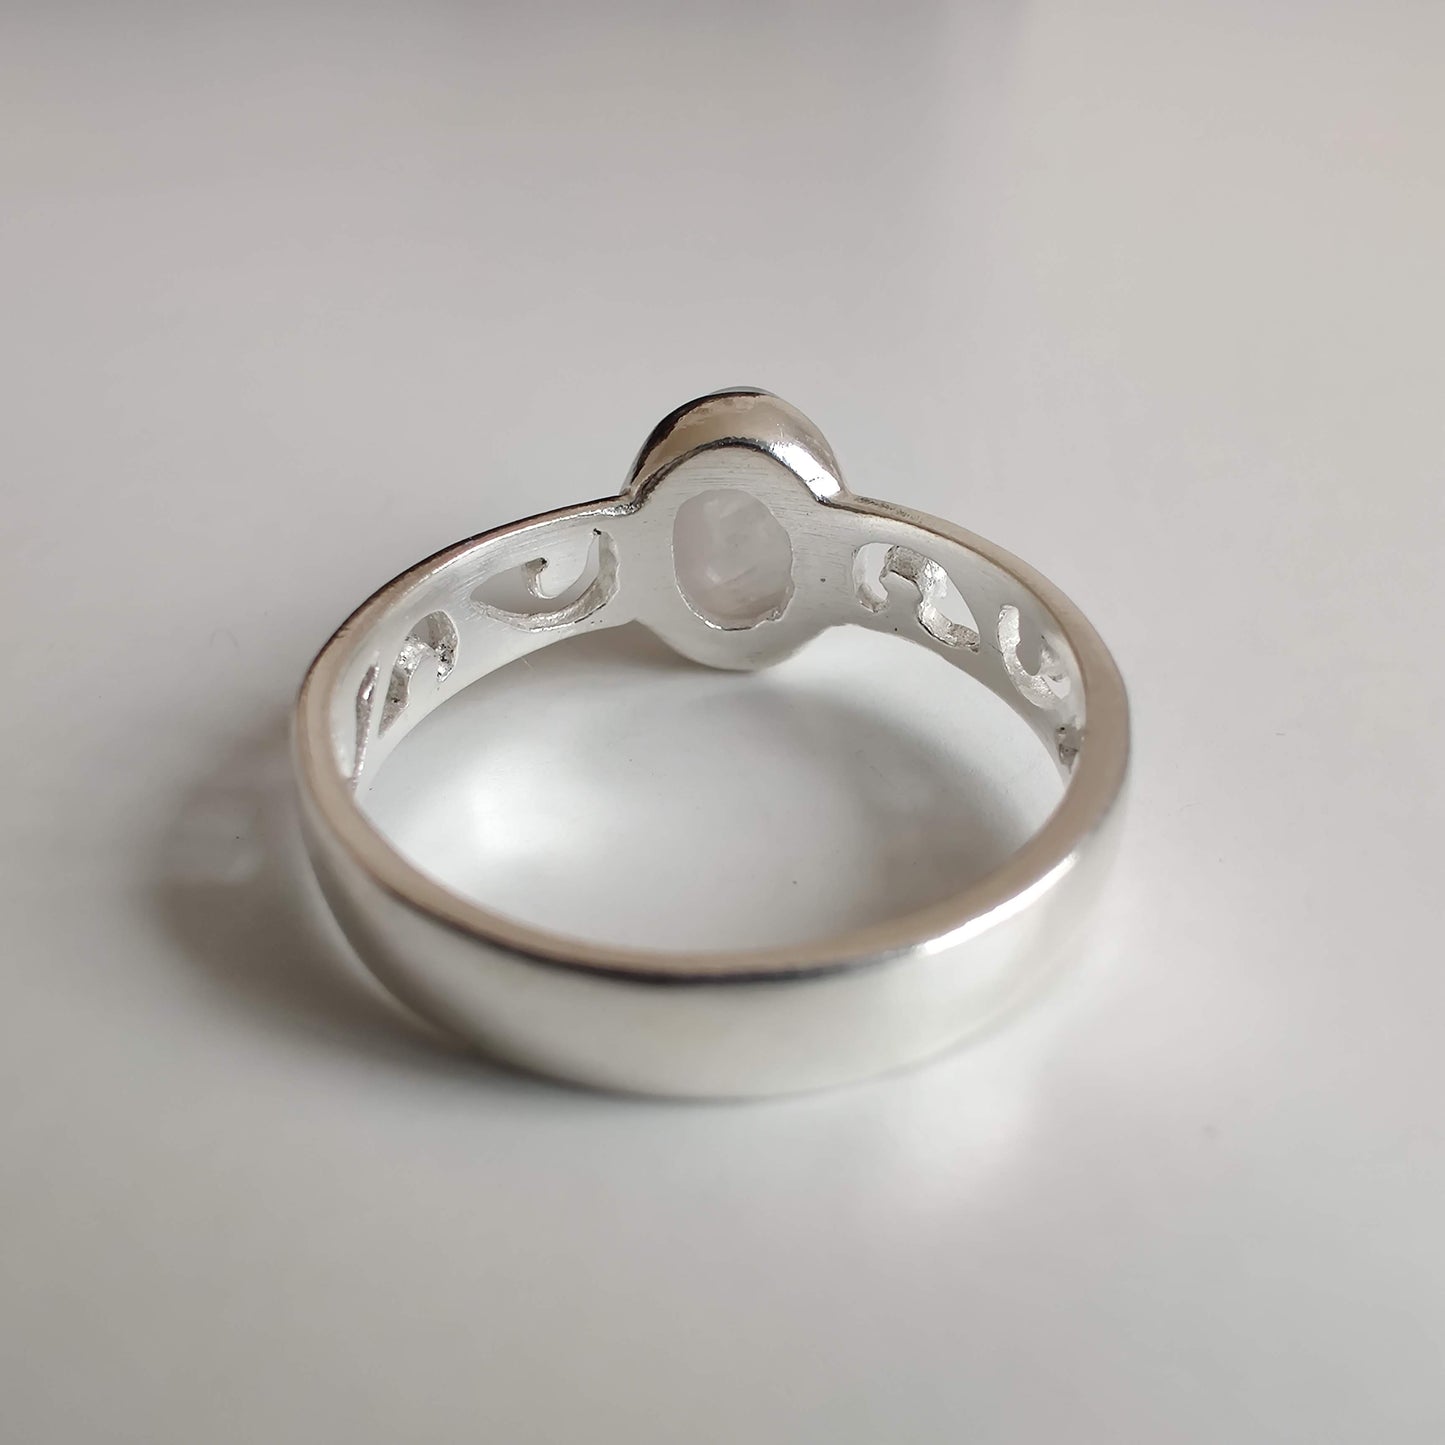 Moonstone Oval 925 Sterling Silver Ring with Koru Design - Rivendell Shop